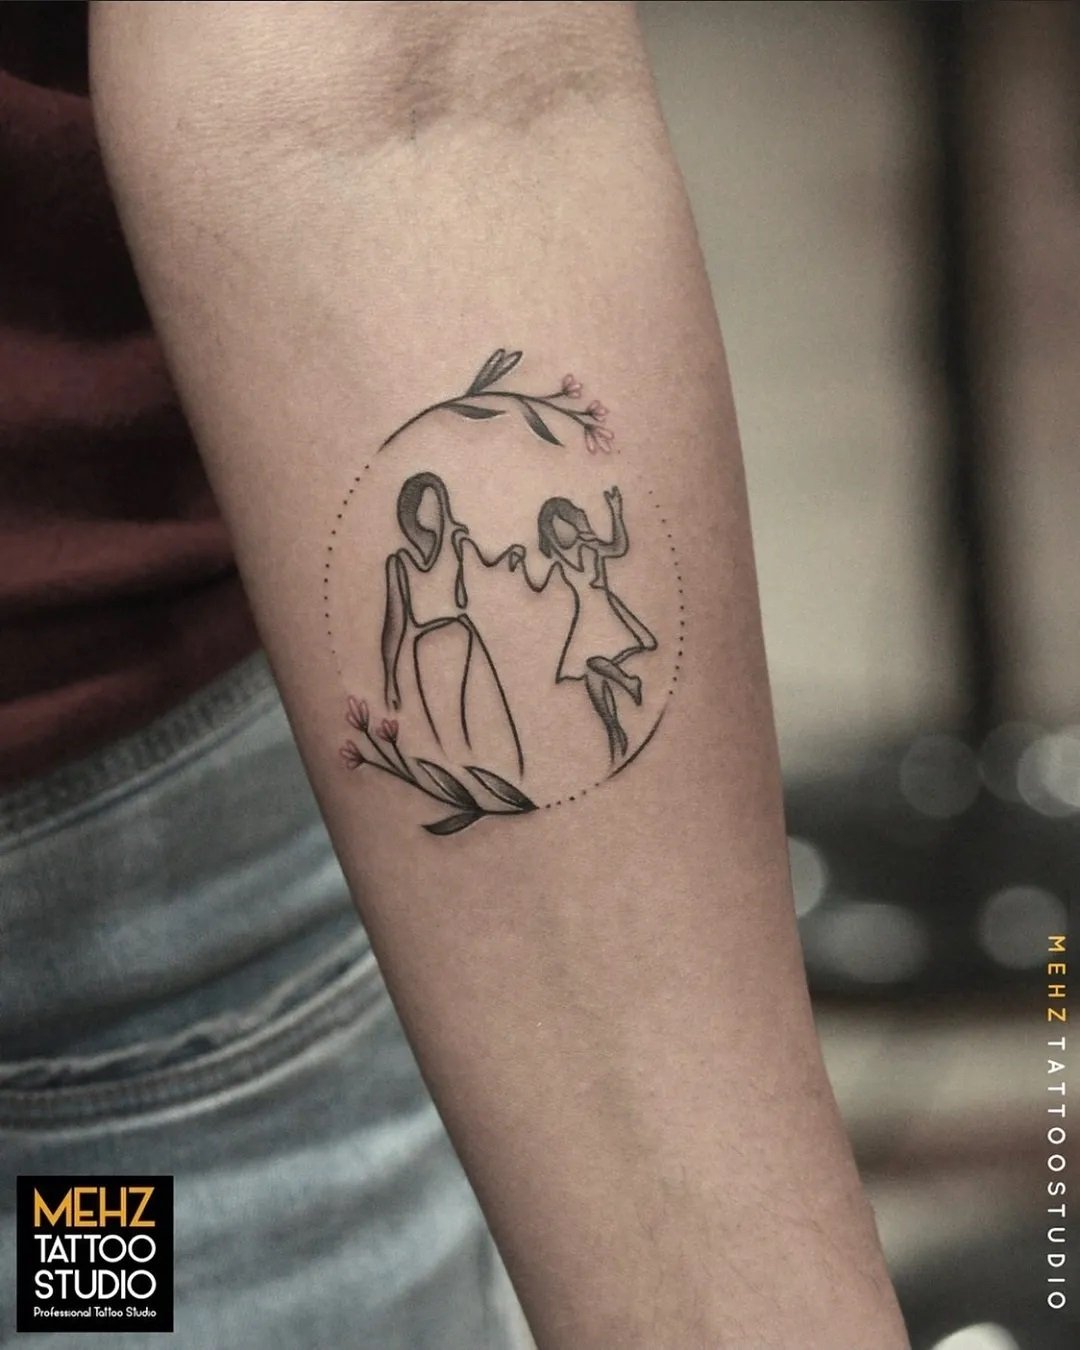 Tatuaje de madre e hija pequeño y sentimental